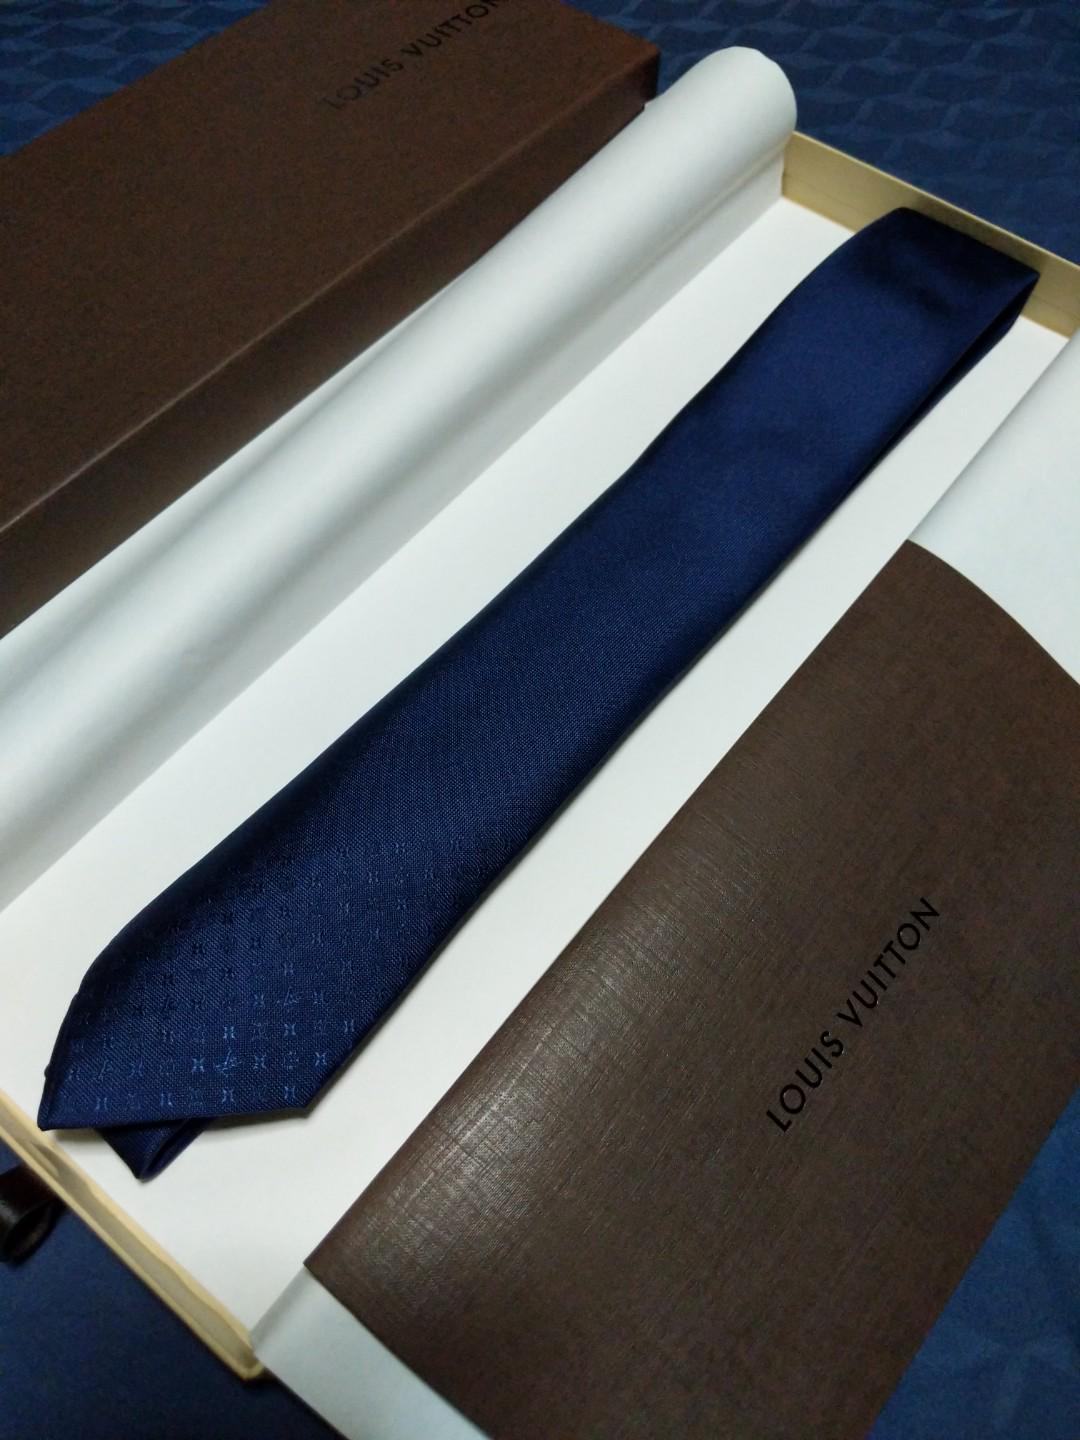 Louis Vuitton Tie L Size Men's M78765 100% Silk Pink